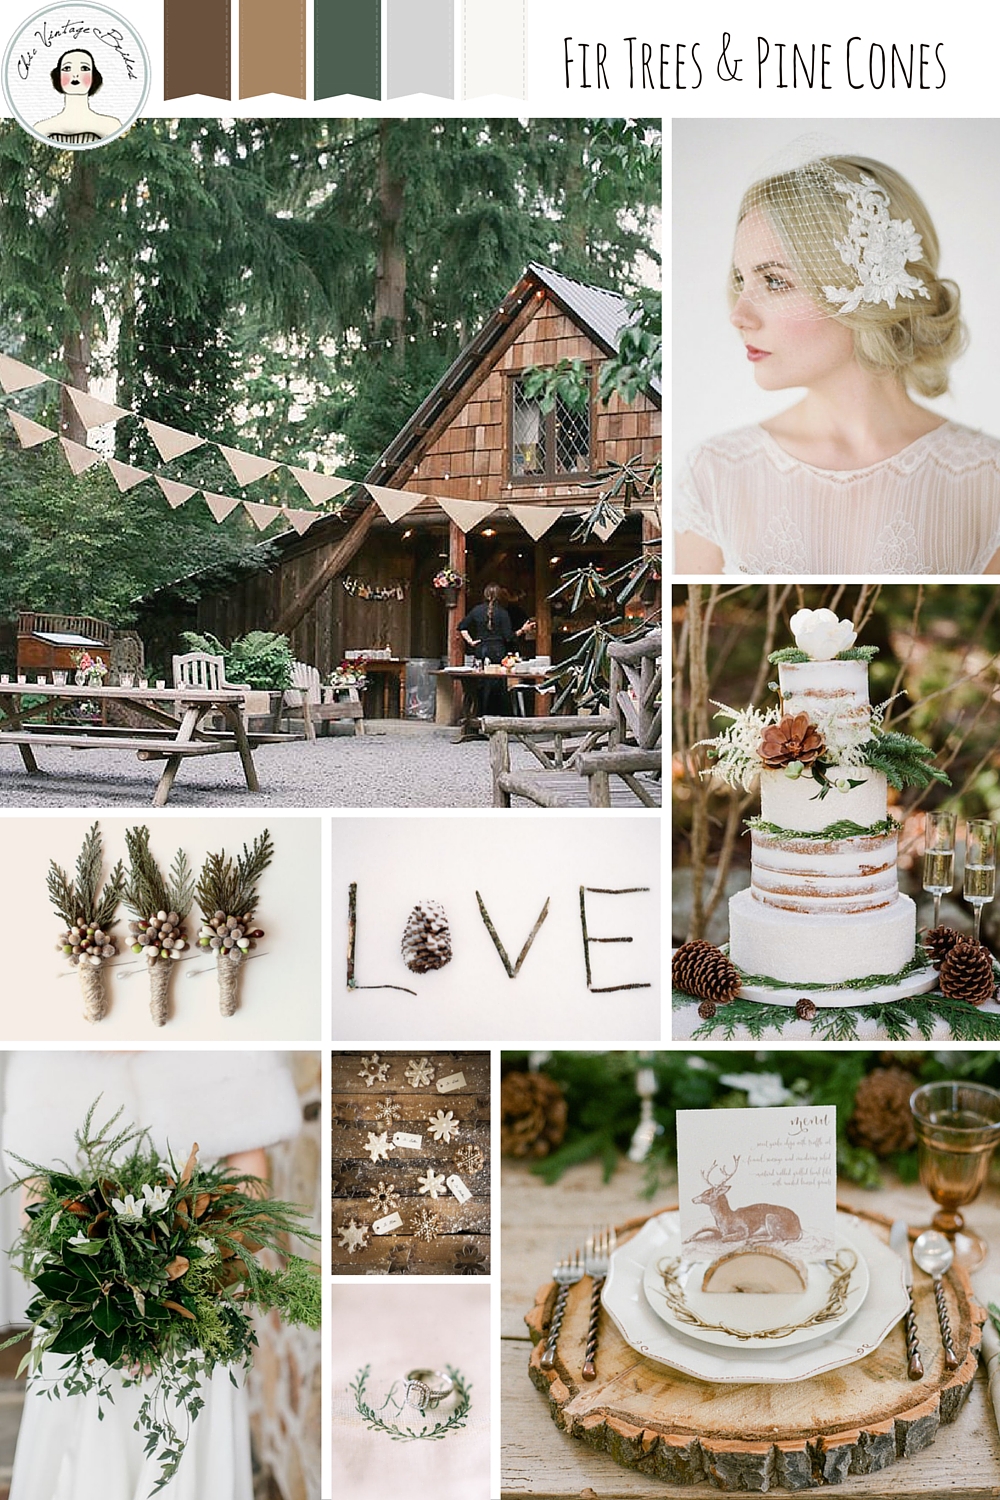 Fir Trees & Pine Cones - A Rustic Winter Woodland Wedding Inspiration Board